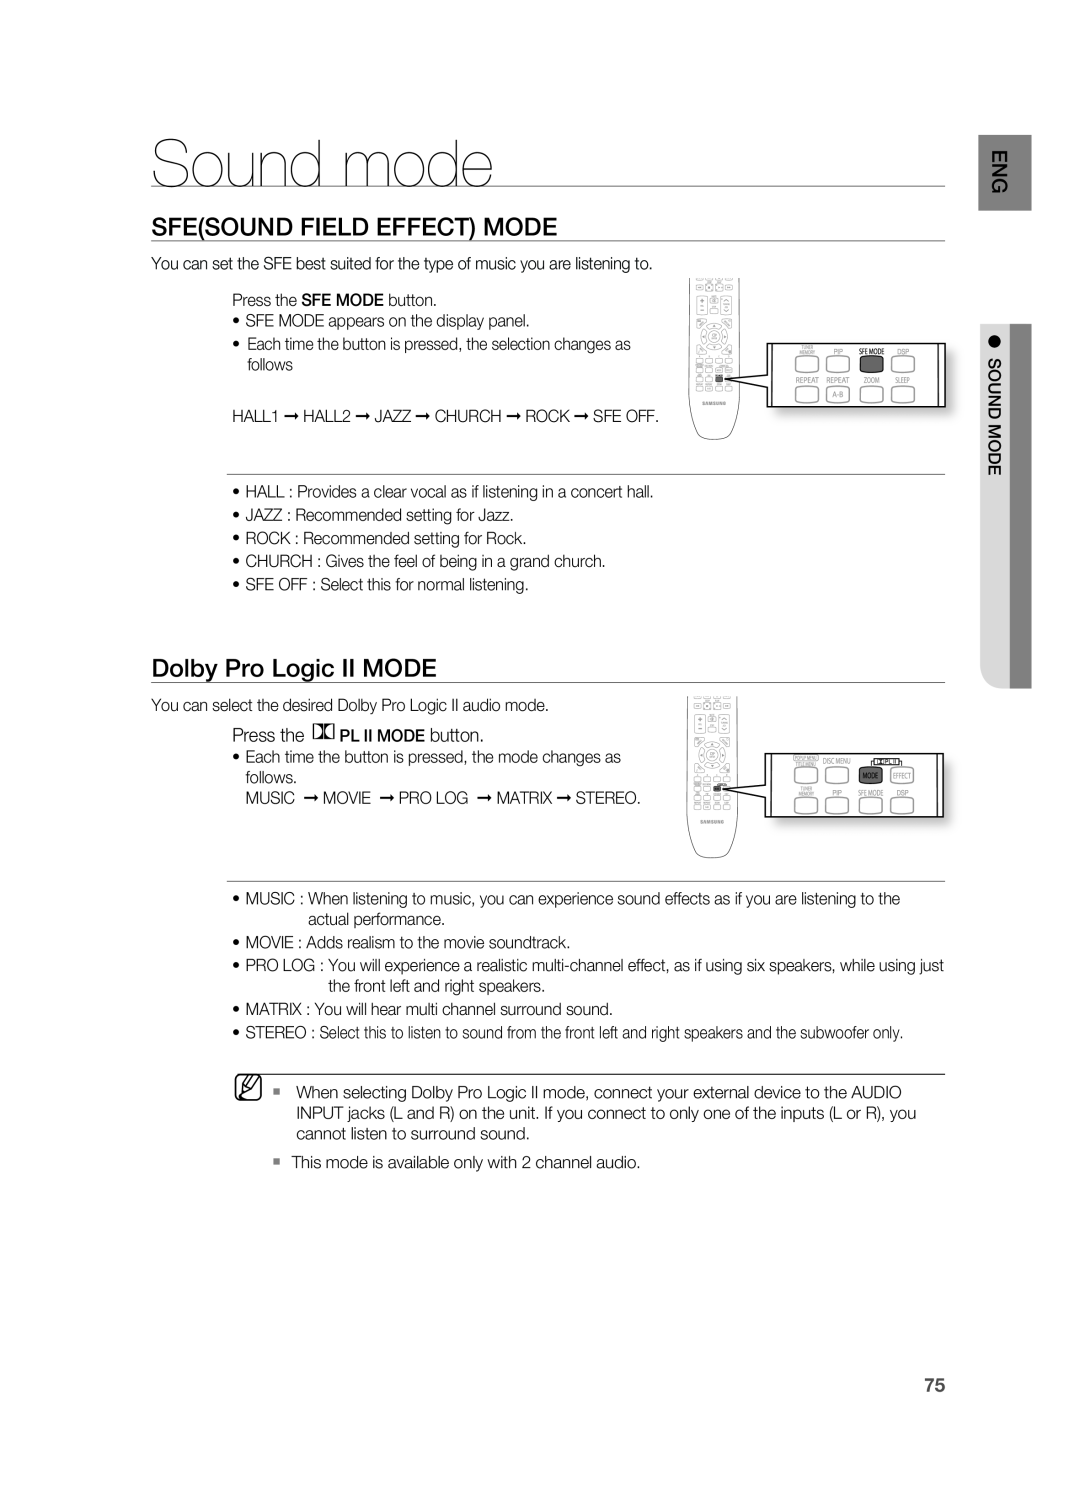 Samsung HT-BD3252 user manual Sound mode, Sfesound Field Effect Mode, Dolby Pro Logic II MODE 